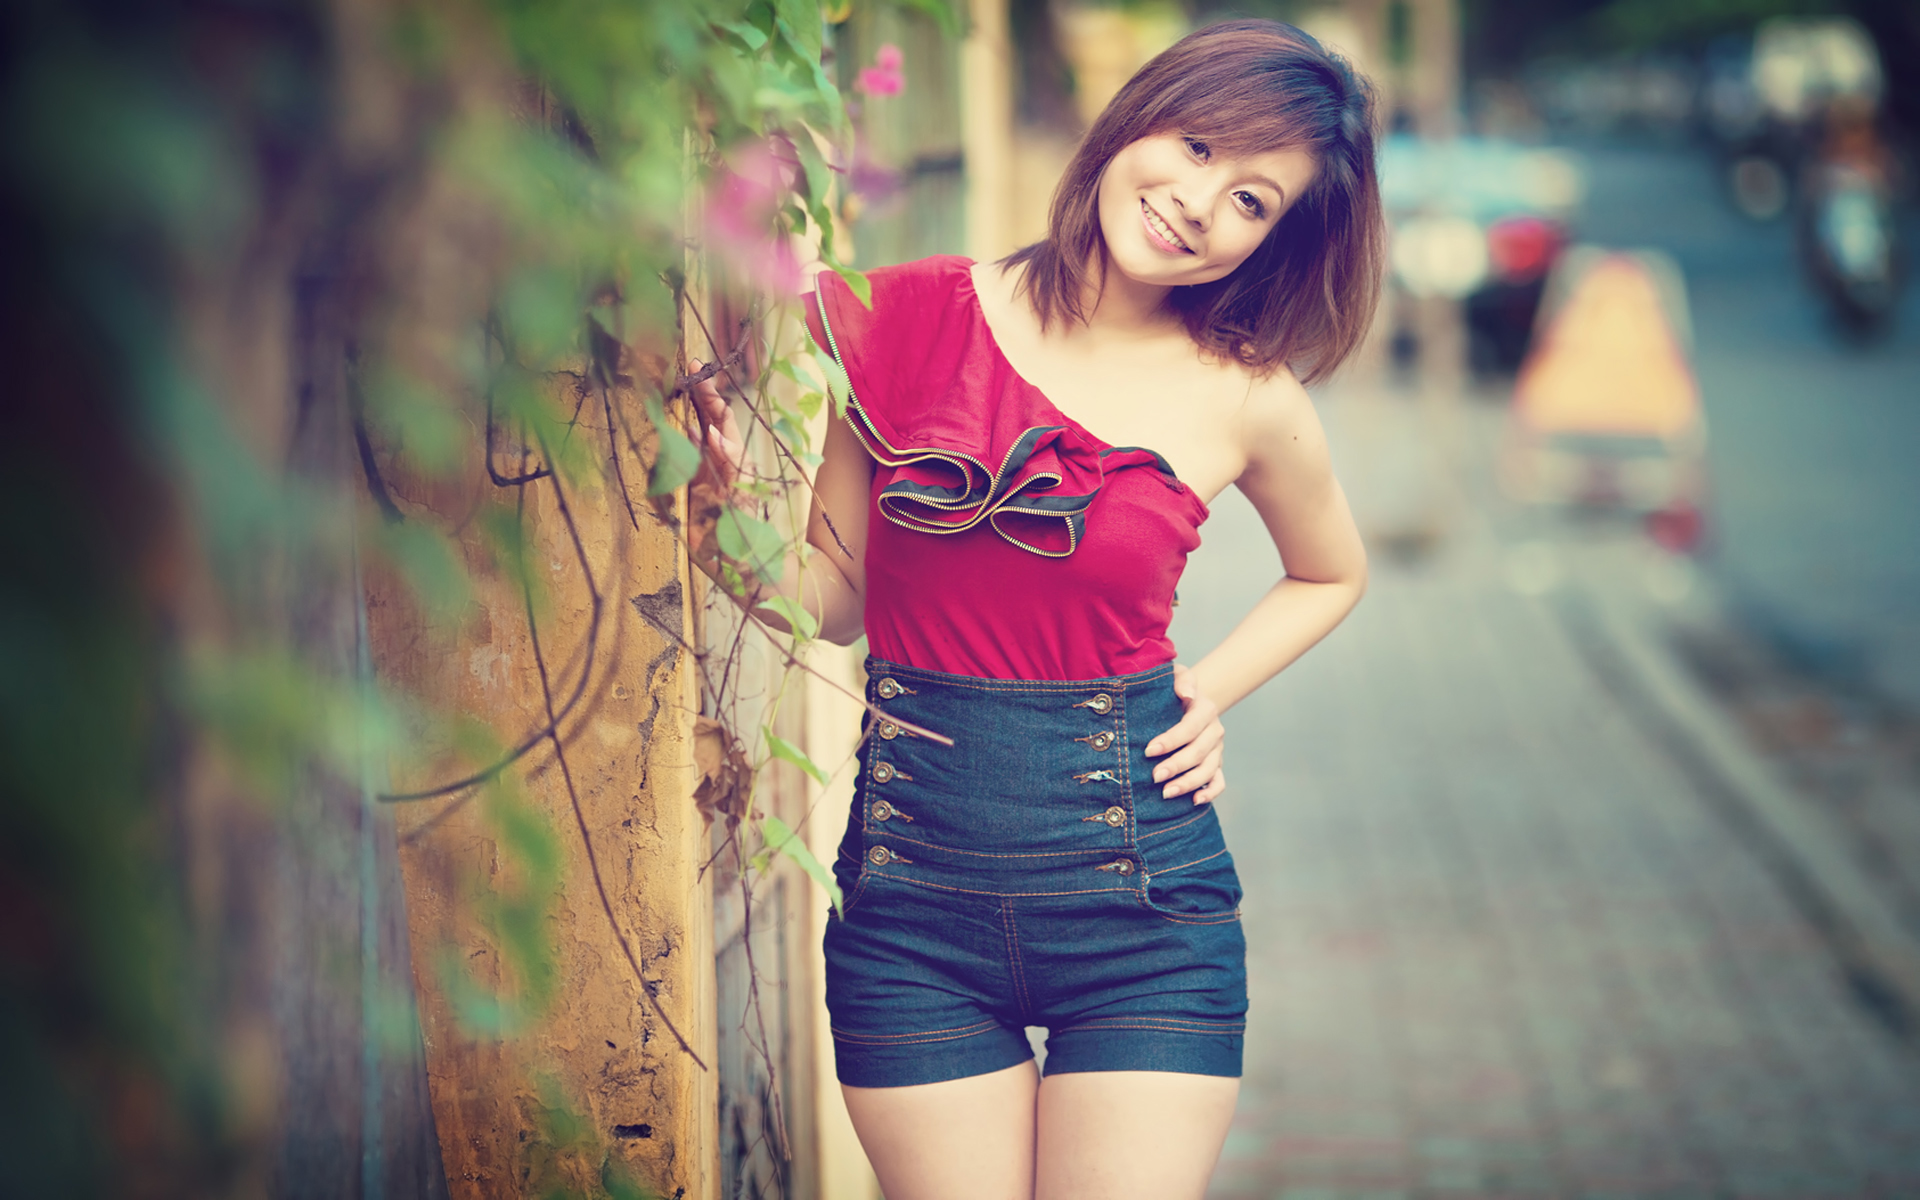 Cute And Beautiful Asian Girls Wallpapers Full Hd Free - Girl Photo Download Full Hd - HD Wallpaper 